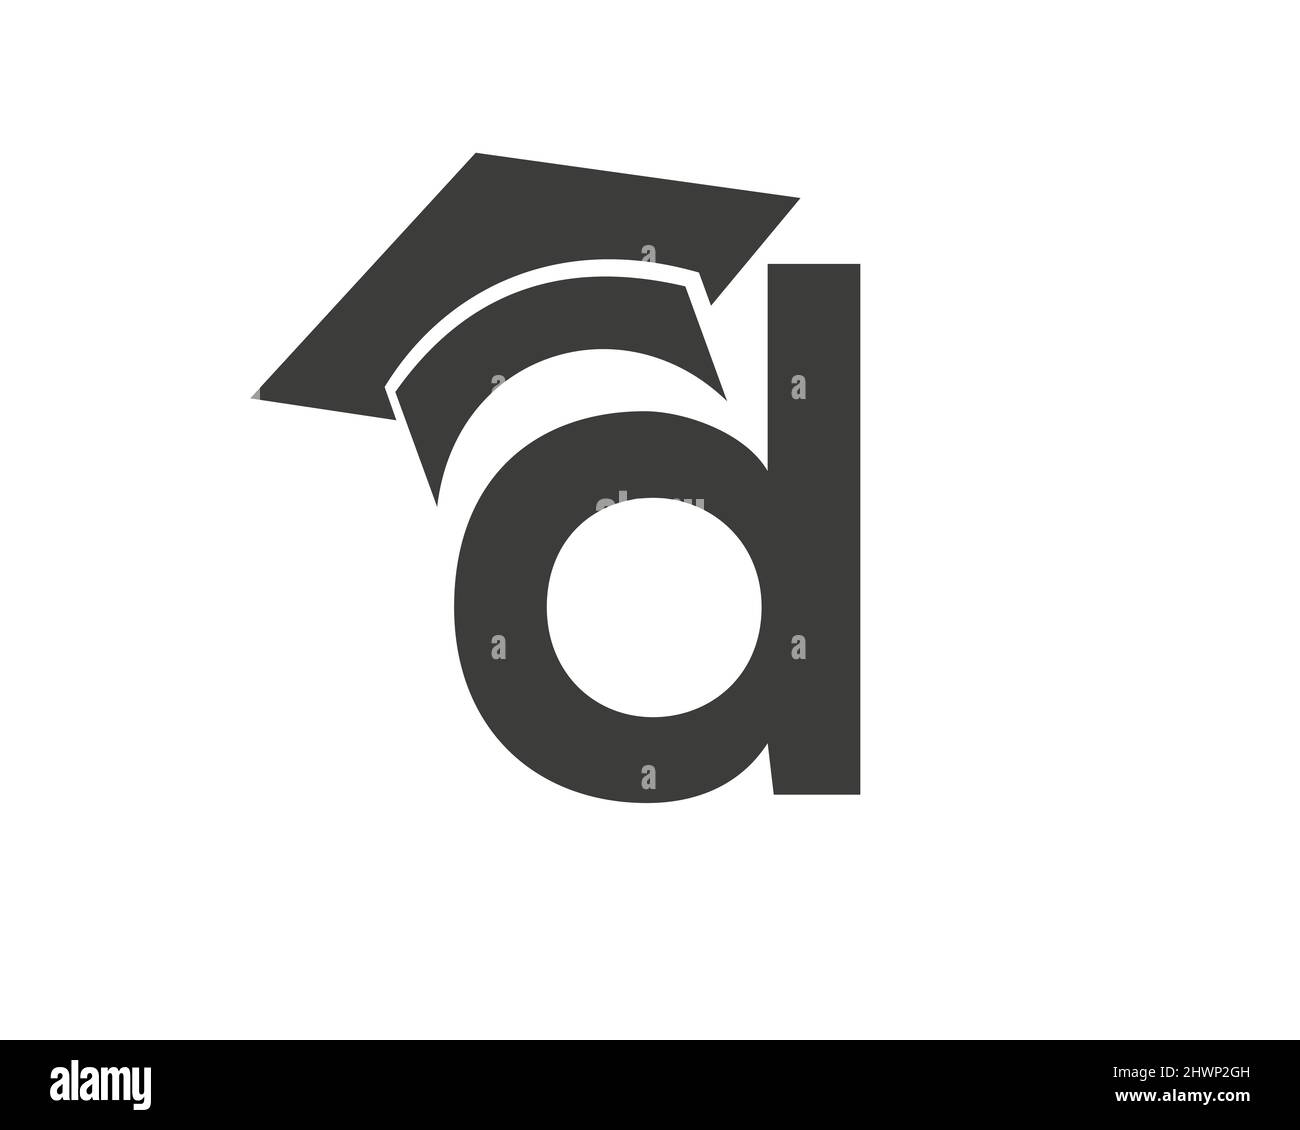 Letter D Education Logo Template. Education Logo On D Letter, Initial Education Hat Concept Template Stock Vector